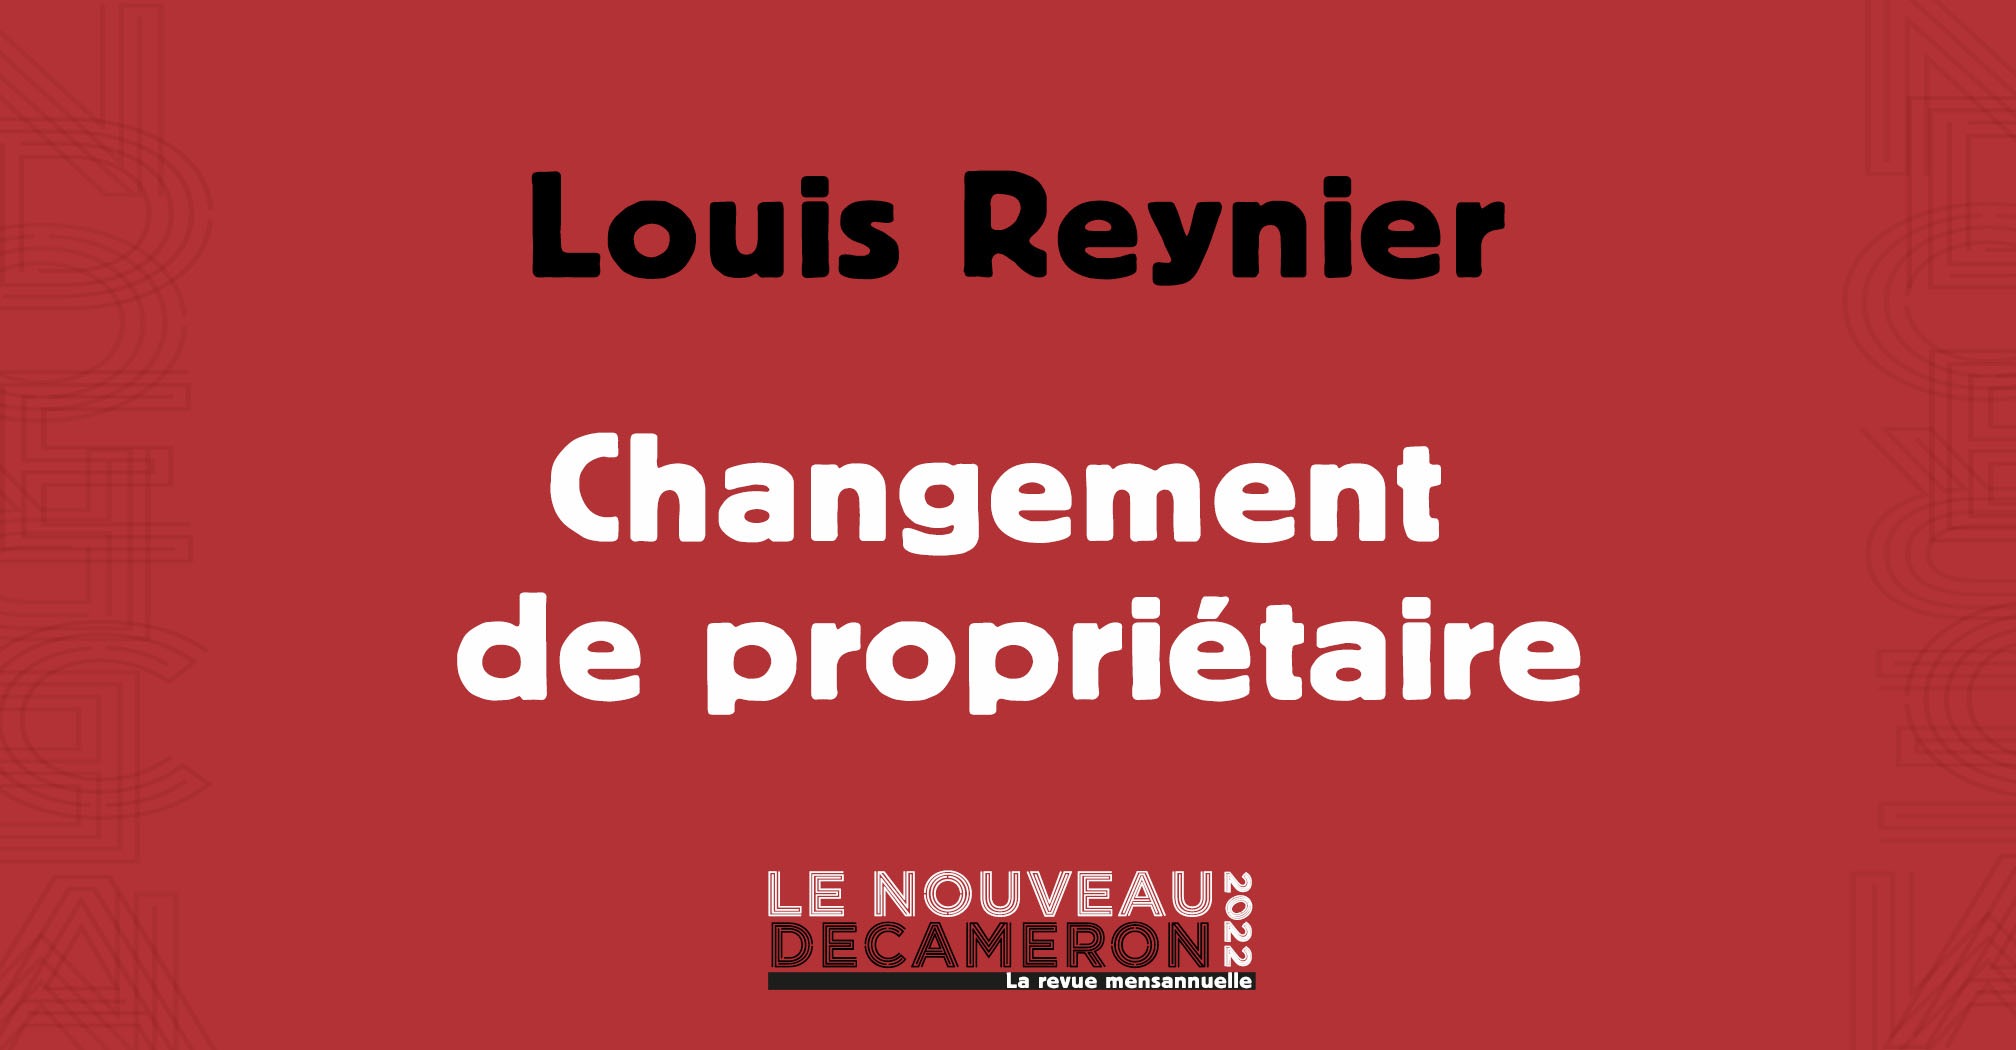 Louis Reynier - Changement de propriétaire 